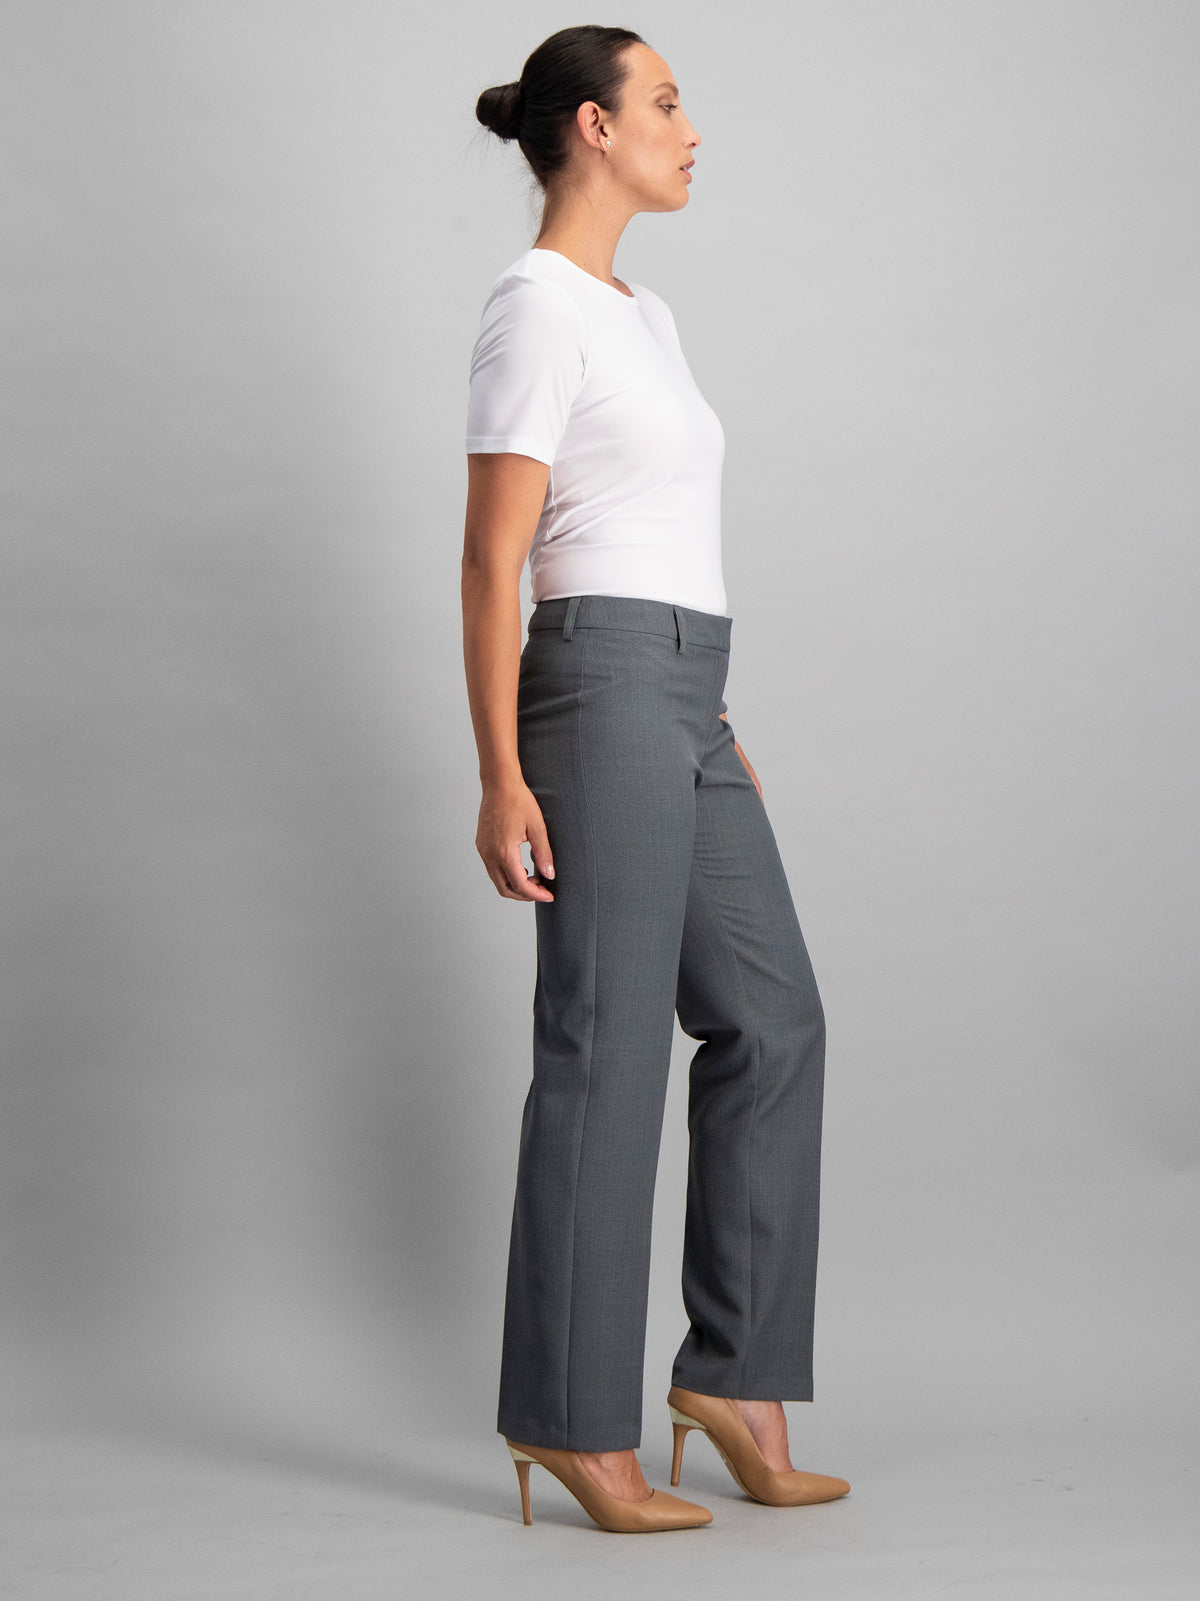 Christine tailored pants - grey